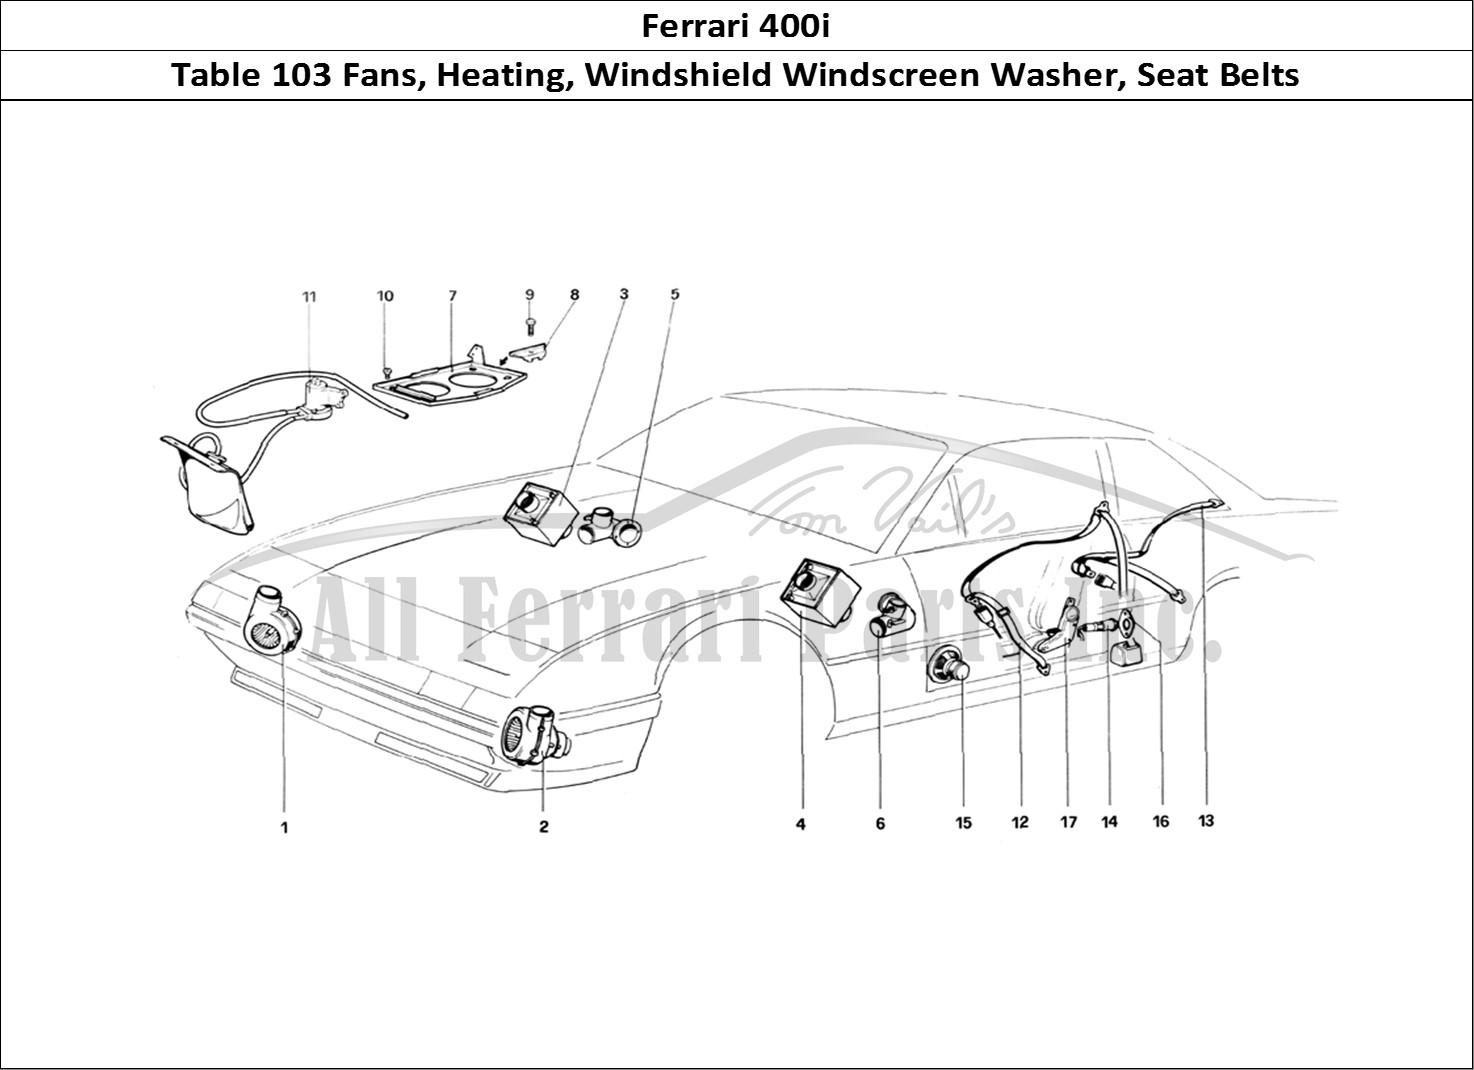 Ferrari Parts Ferrari 400i (1983 Mechanical) Page 103 Cooling Electric Fans - H